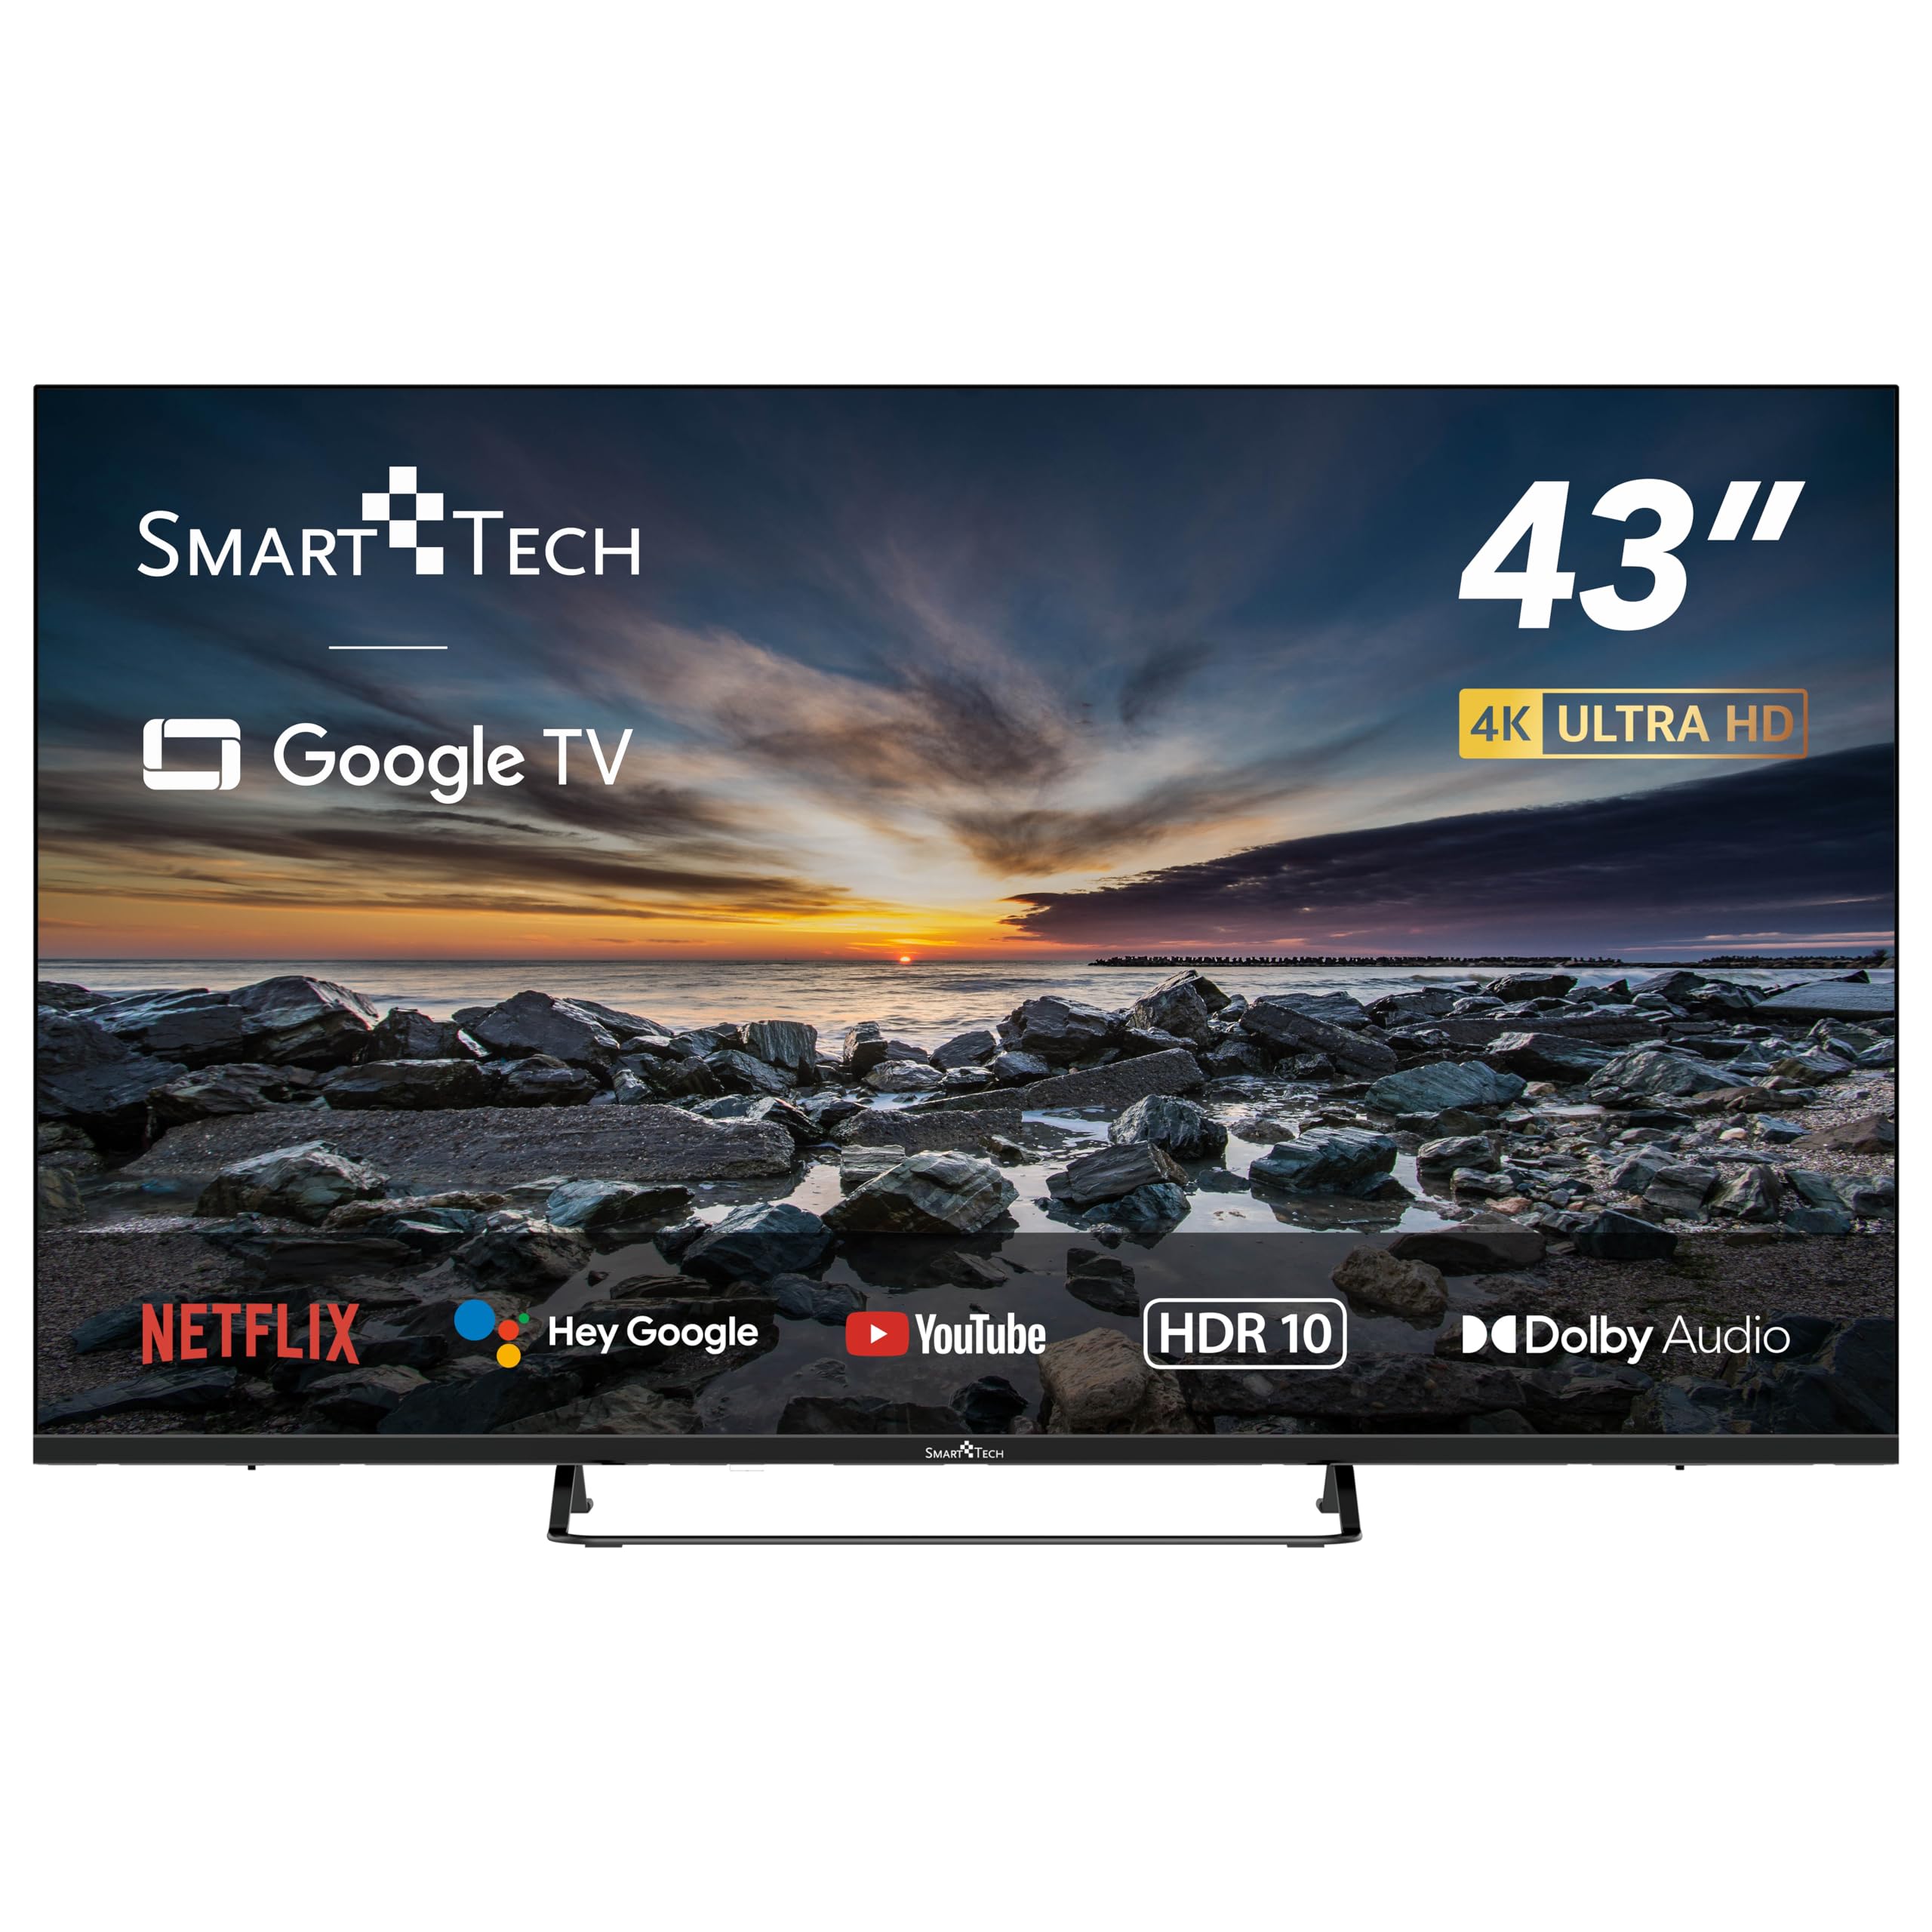 SMART TECH Smart TV, 43 Zoll 4K UHD, Google TV, Wi-Fi, DVB-T2/C/S2, HbbTV, Netflix, YouTube, Dolby Audio, 2023 [43UG10V3]